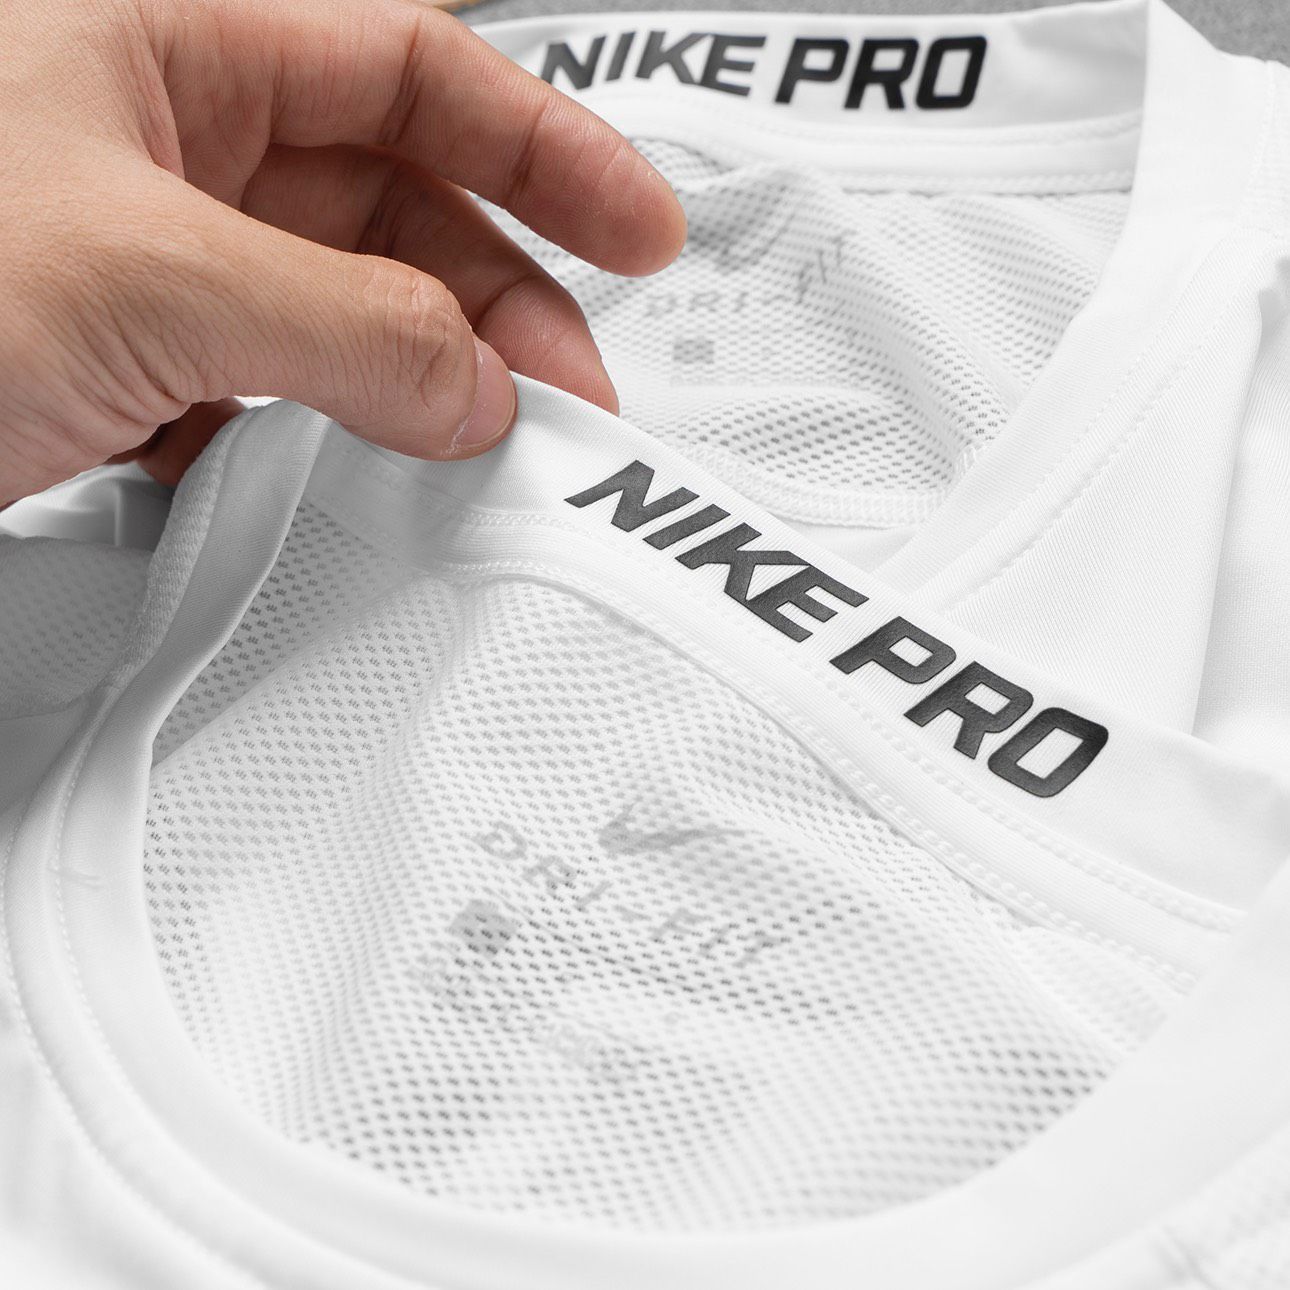  Áo Tank Nike Pro trắng 